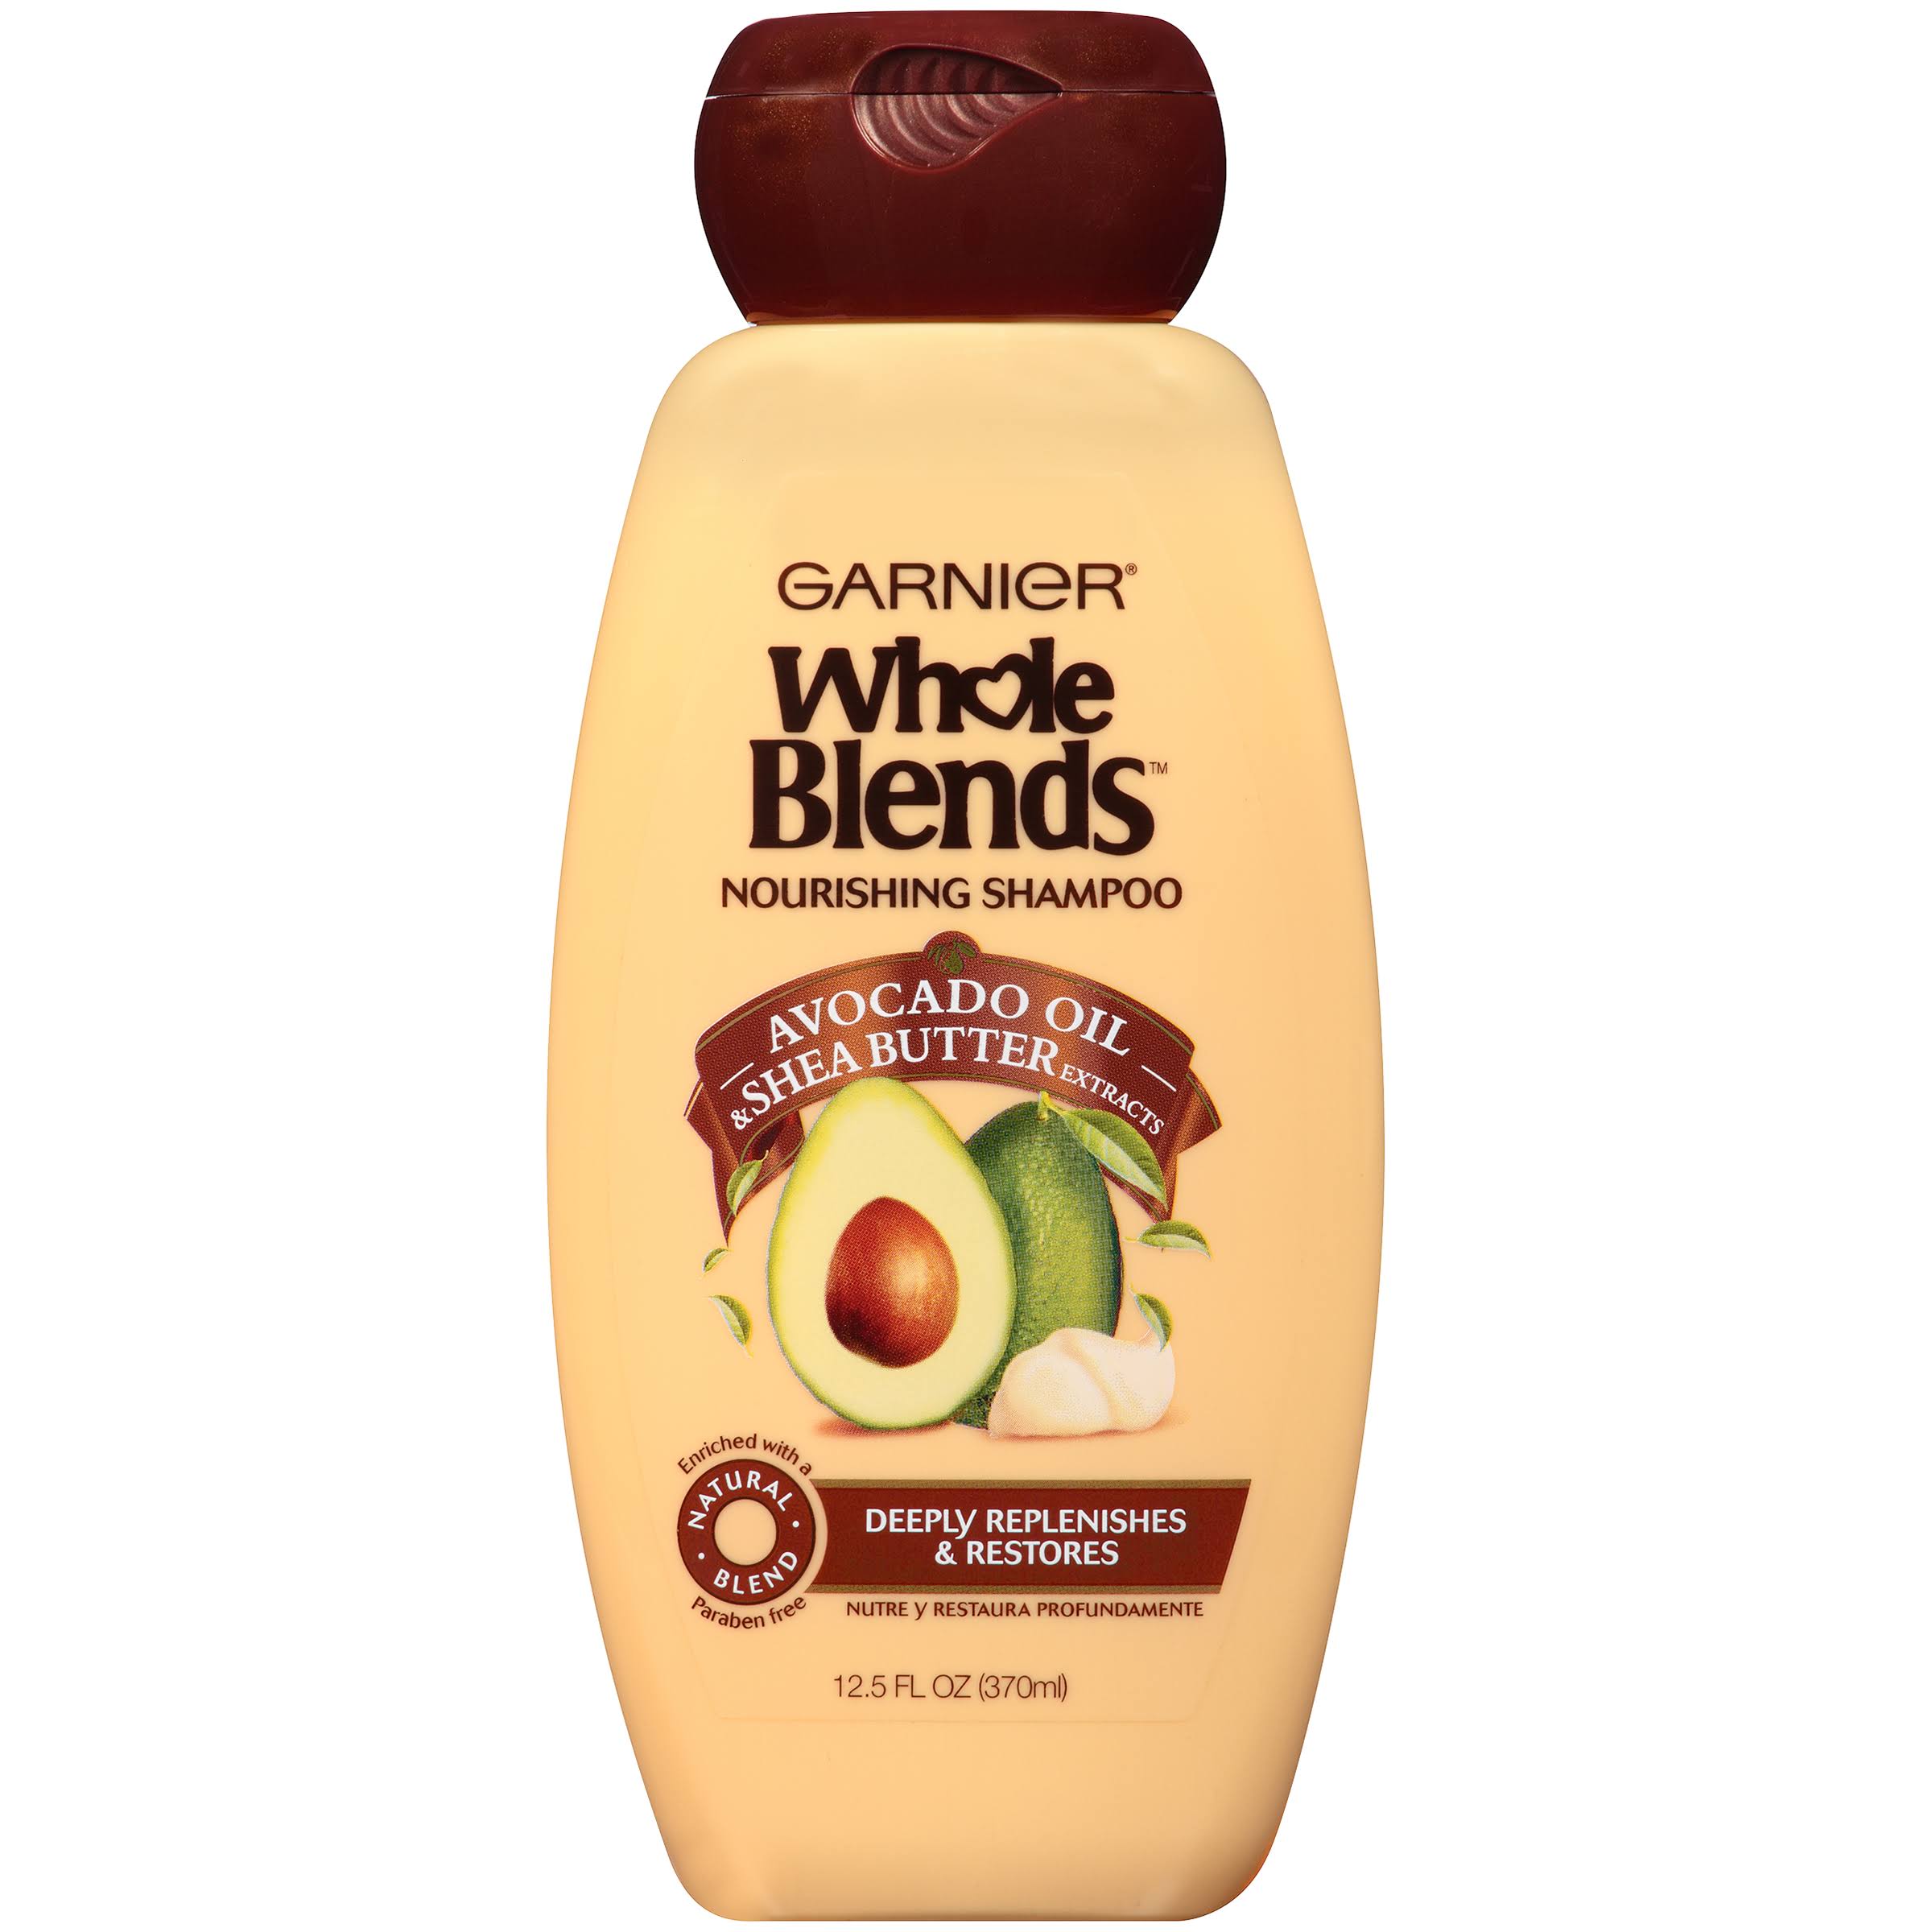 Garnier Whole Blends Nourishing Shampoo - Avocado Oil and Shea Butter Extracts, 12.5oz